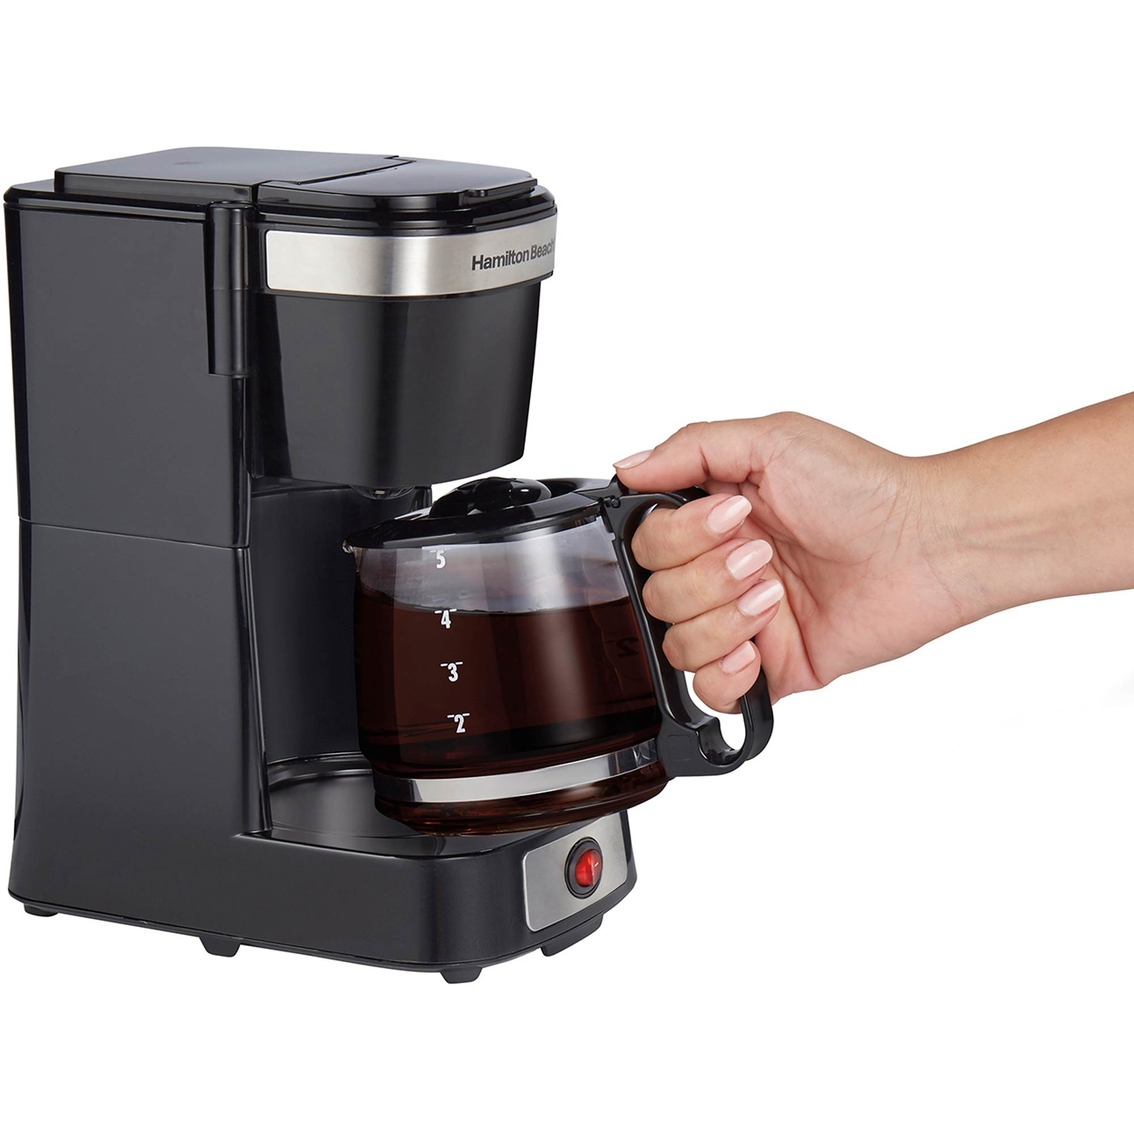 Hamilton Beach 5 Cup Compact Coffee Maker